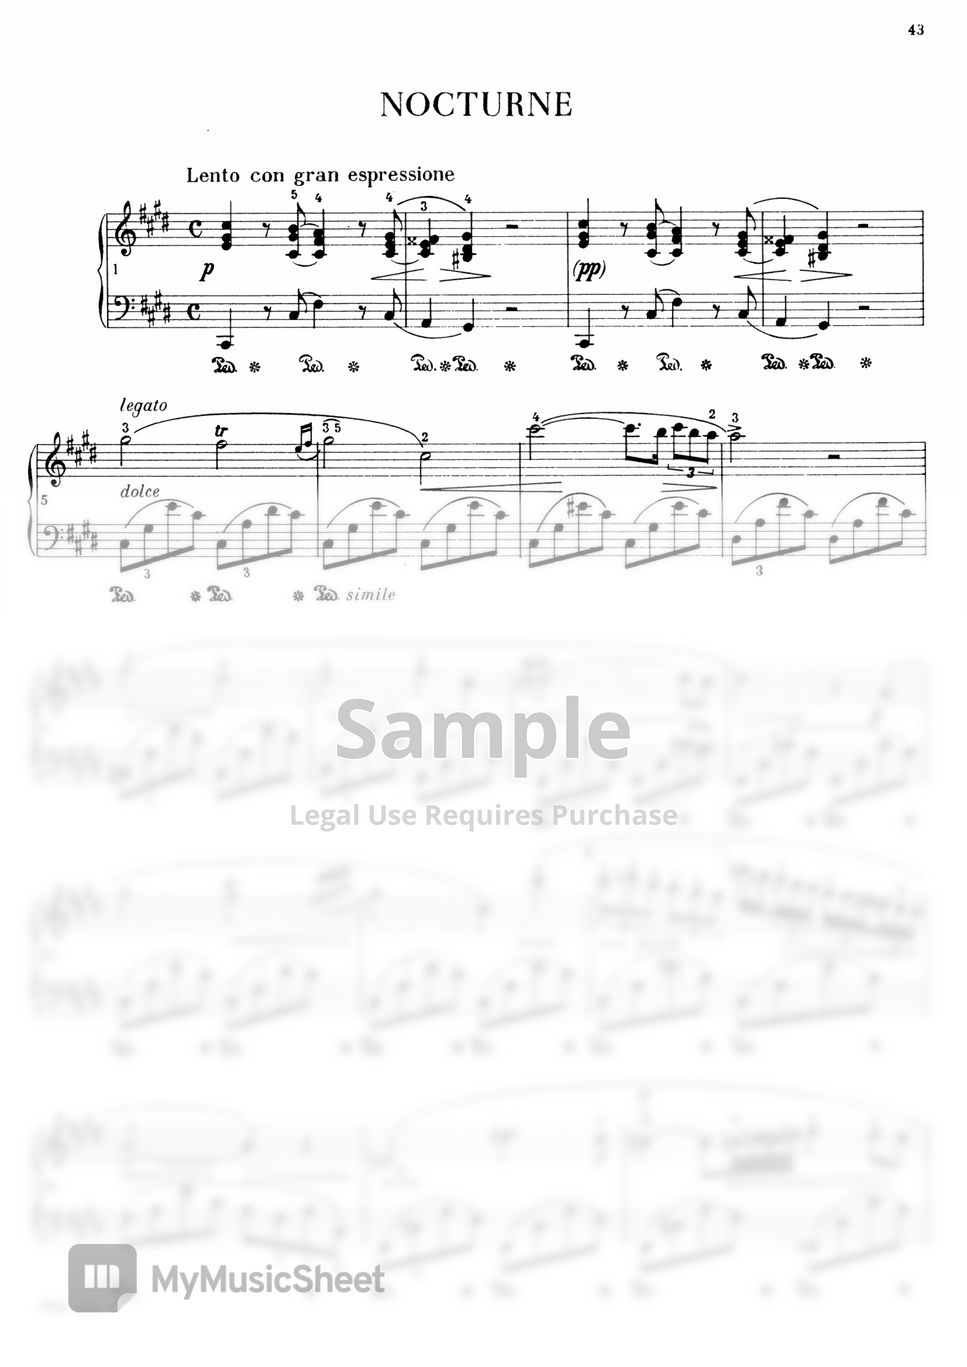 Chopin - Nocturne in C sharp mino Op 20 No 18( Piano) by Open Music Score